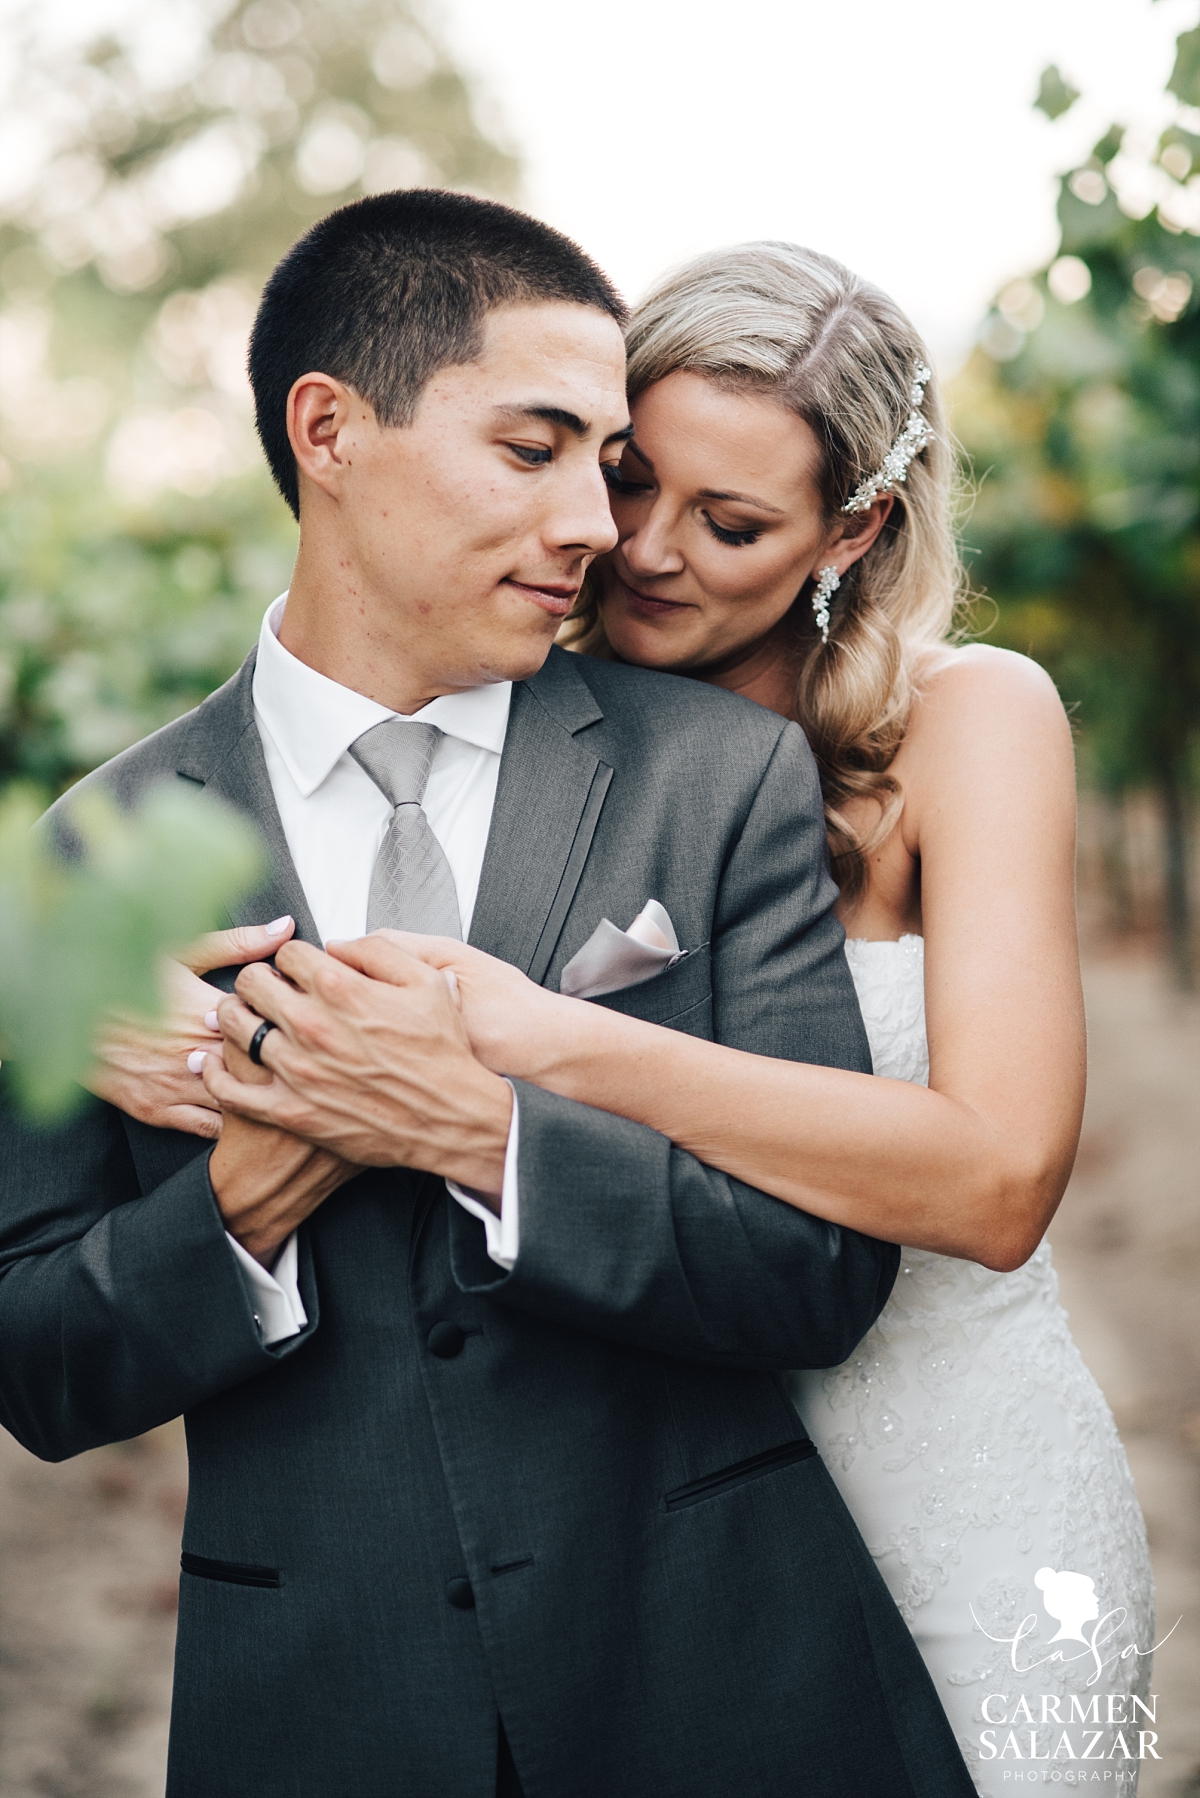 Bride and groom steal an embrace at vineyard wedding - Carmen Salazar